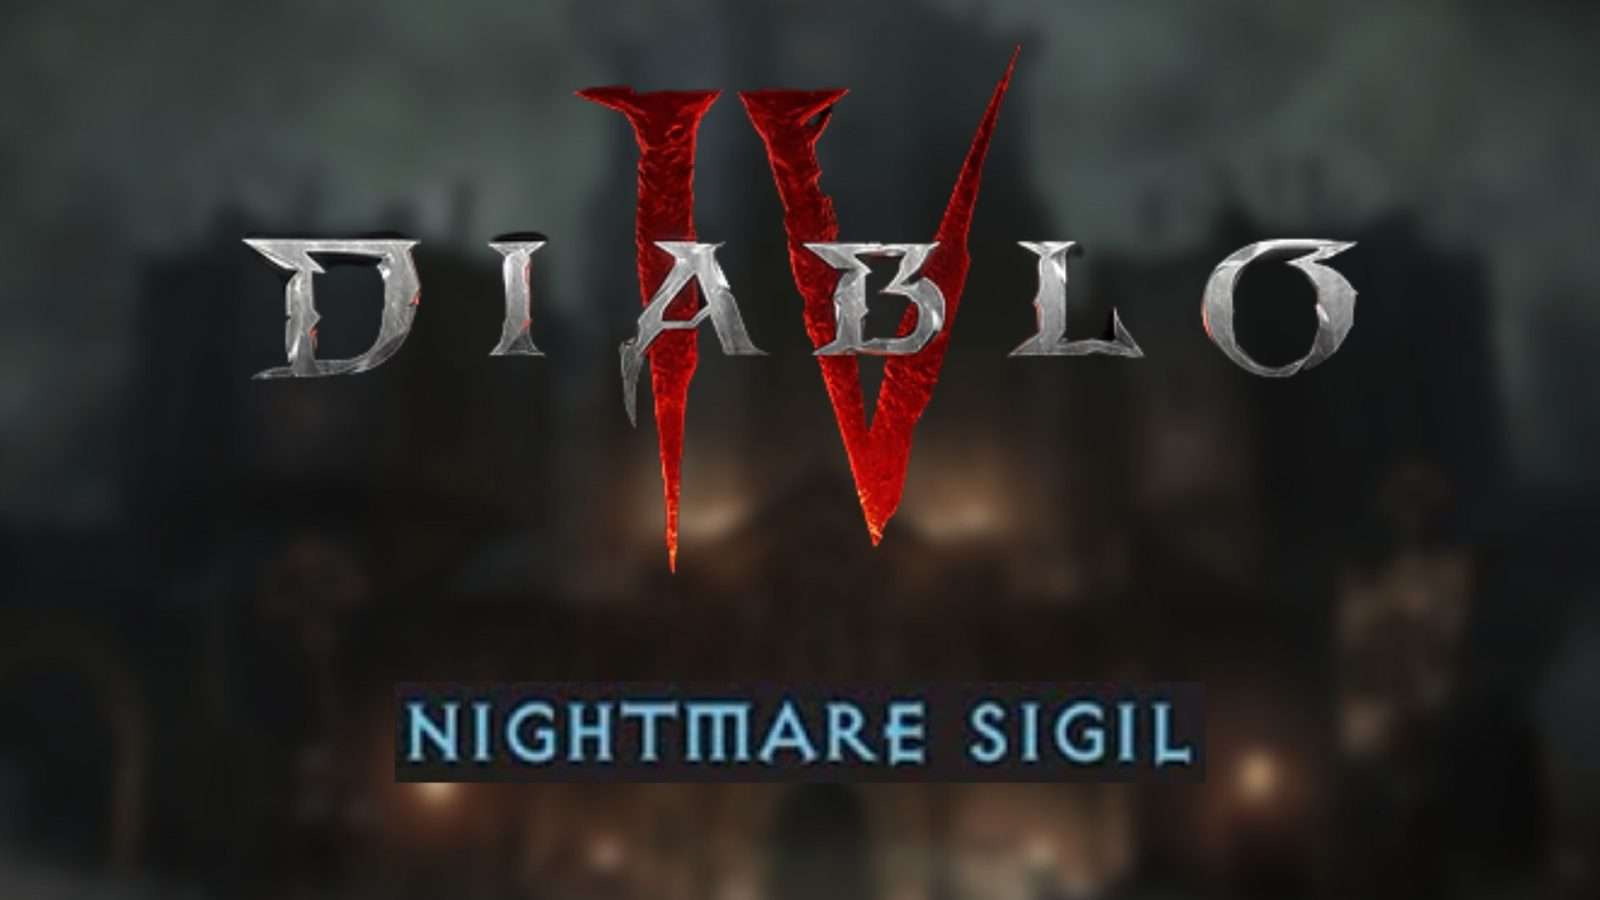 diablo 4 logo with nightmare sigil prompt